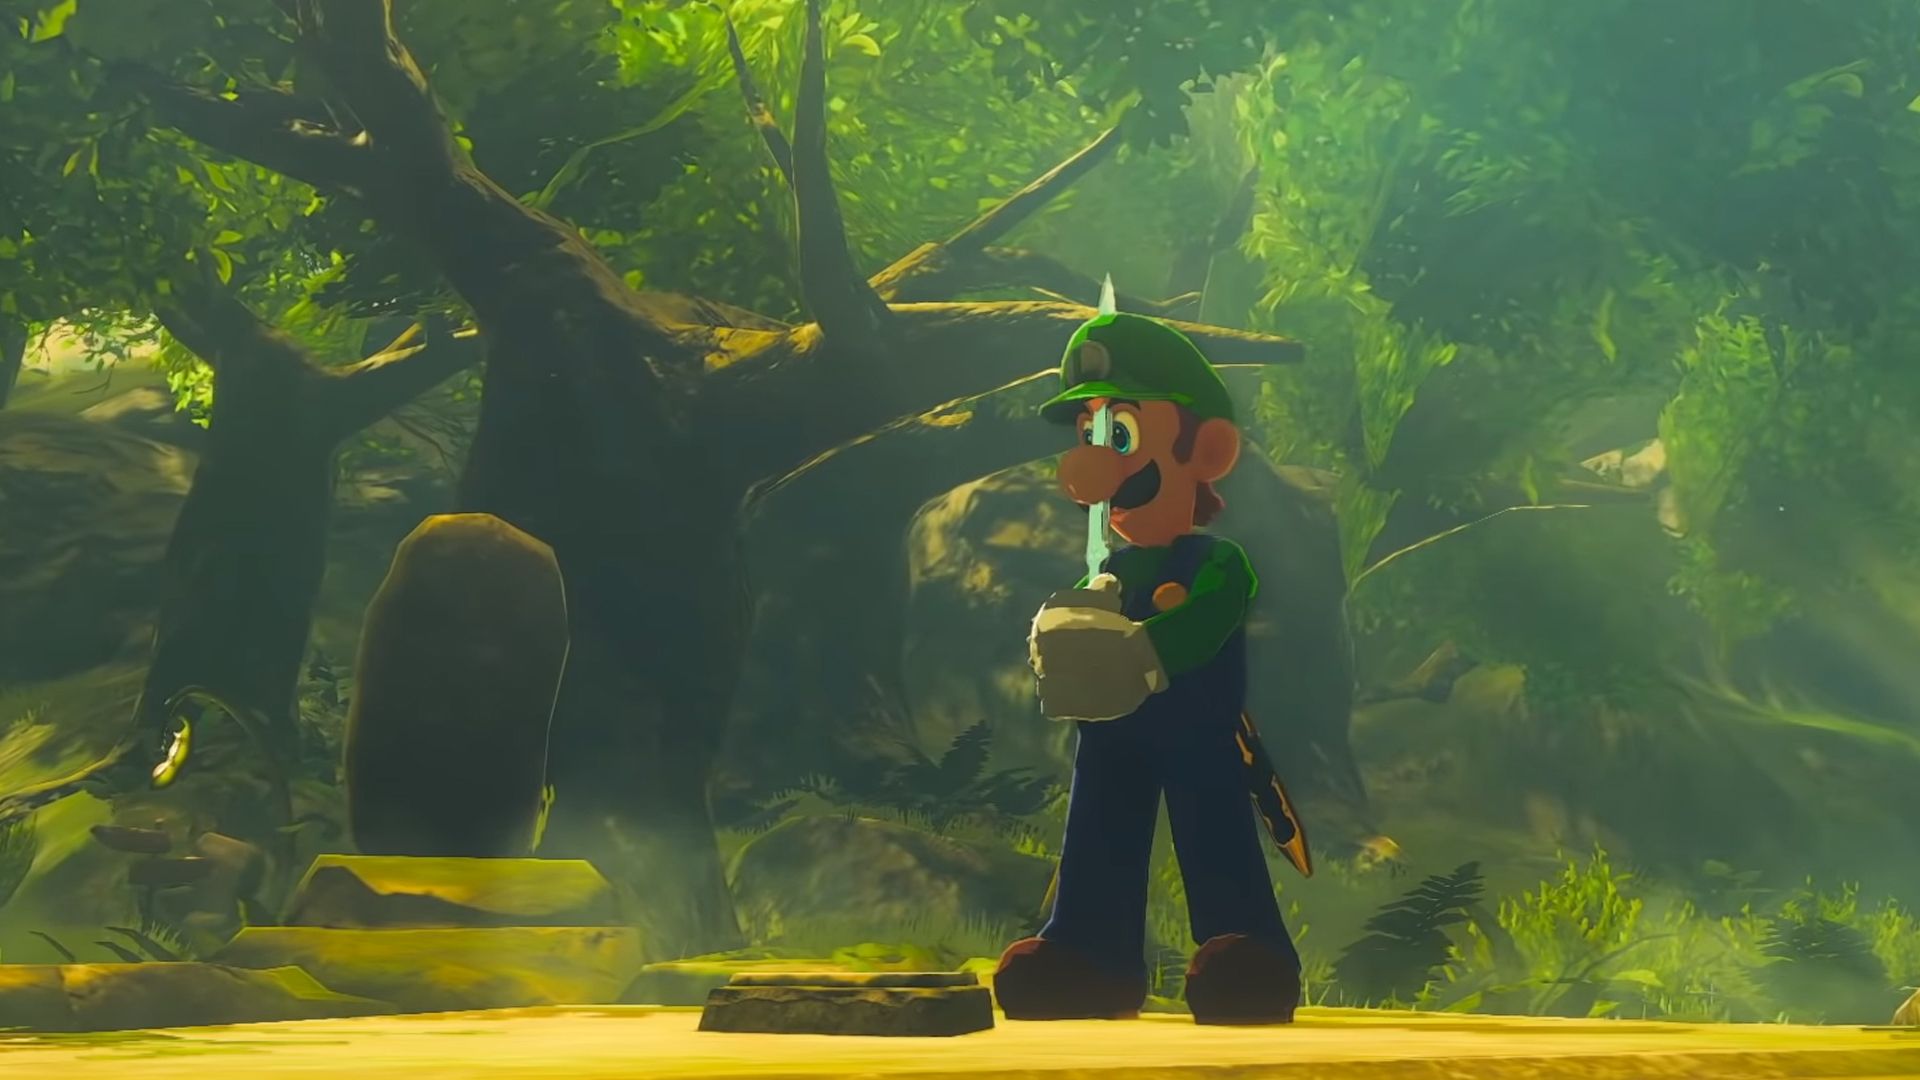 Watch Luigi Pull the Master Sword in The Legend of Zelda: Breath